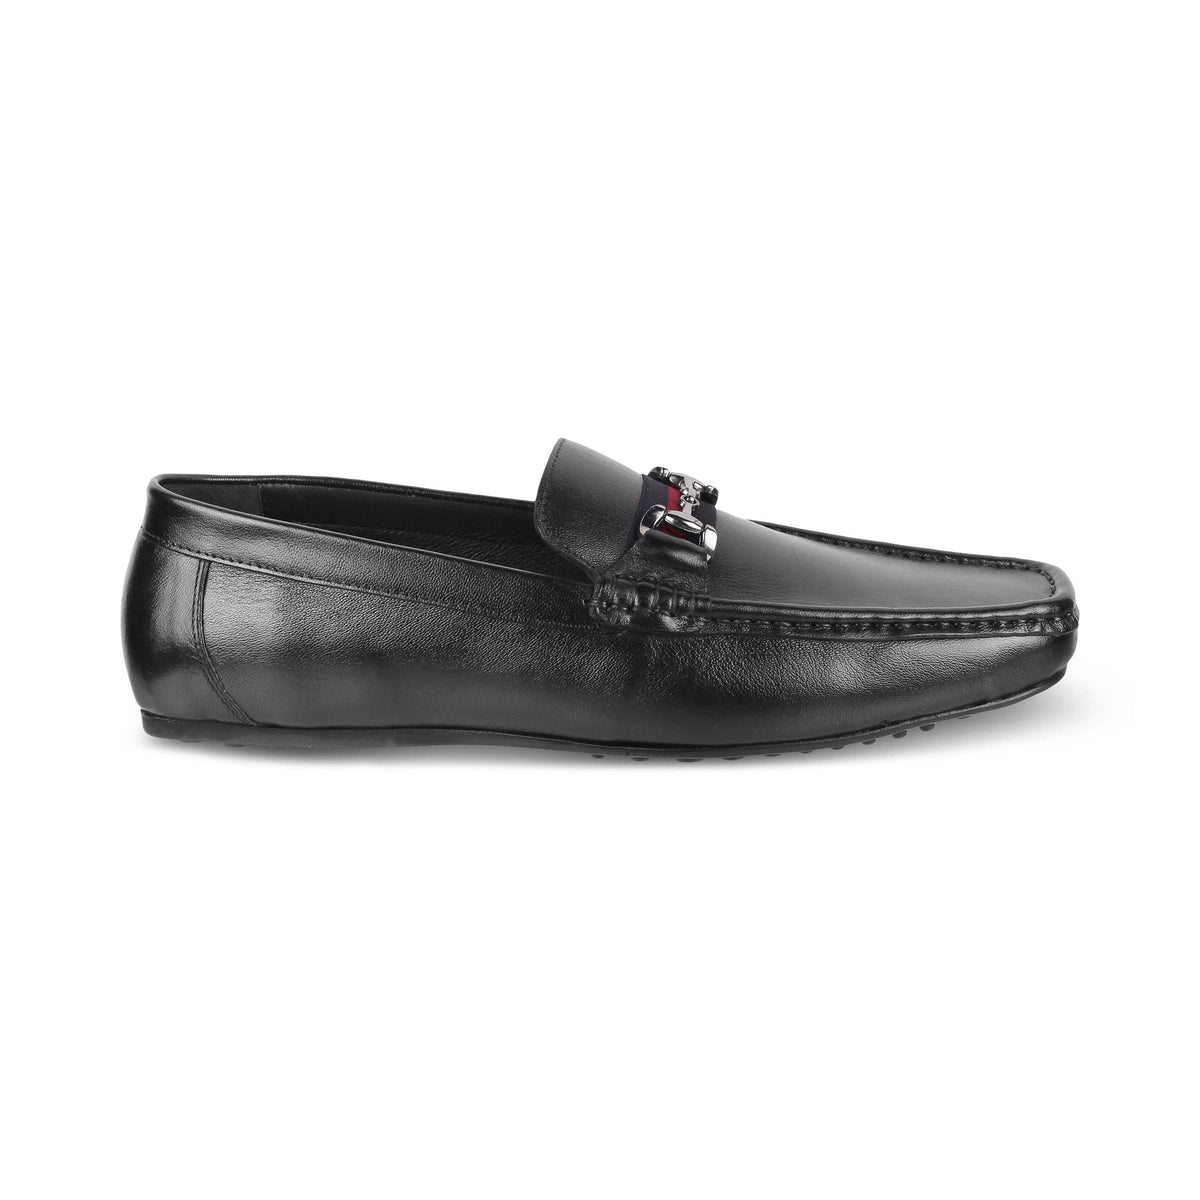 Tresmode Bilbao Black Men's Leather Loafers - Tresmode